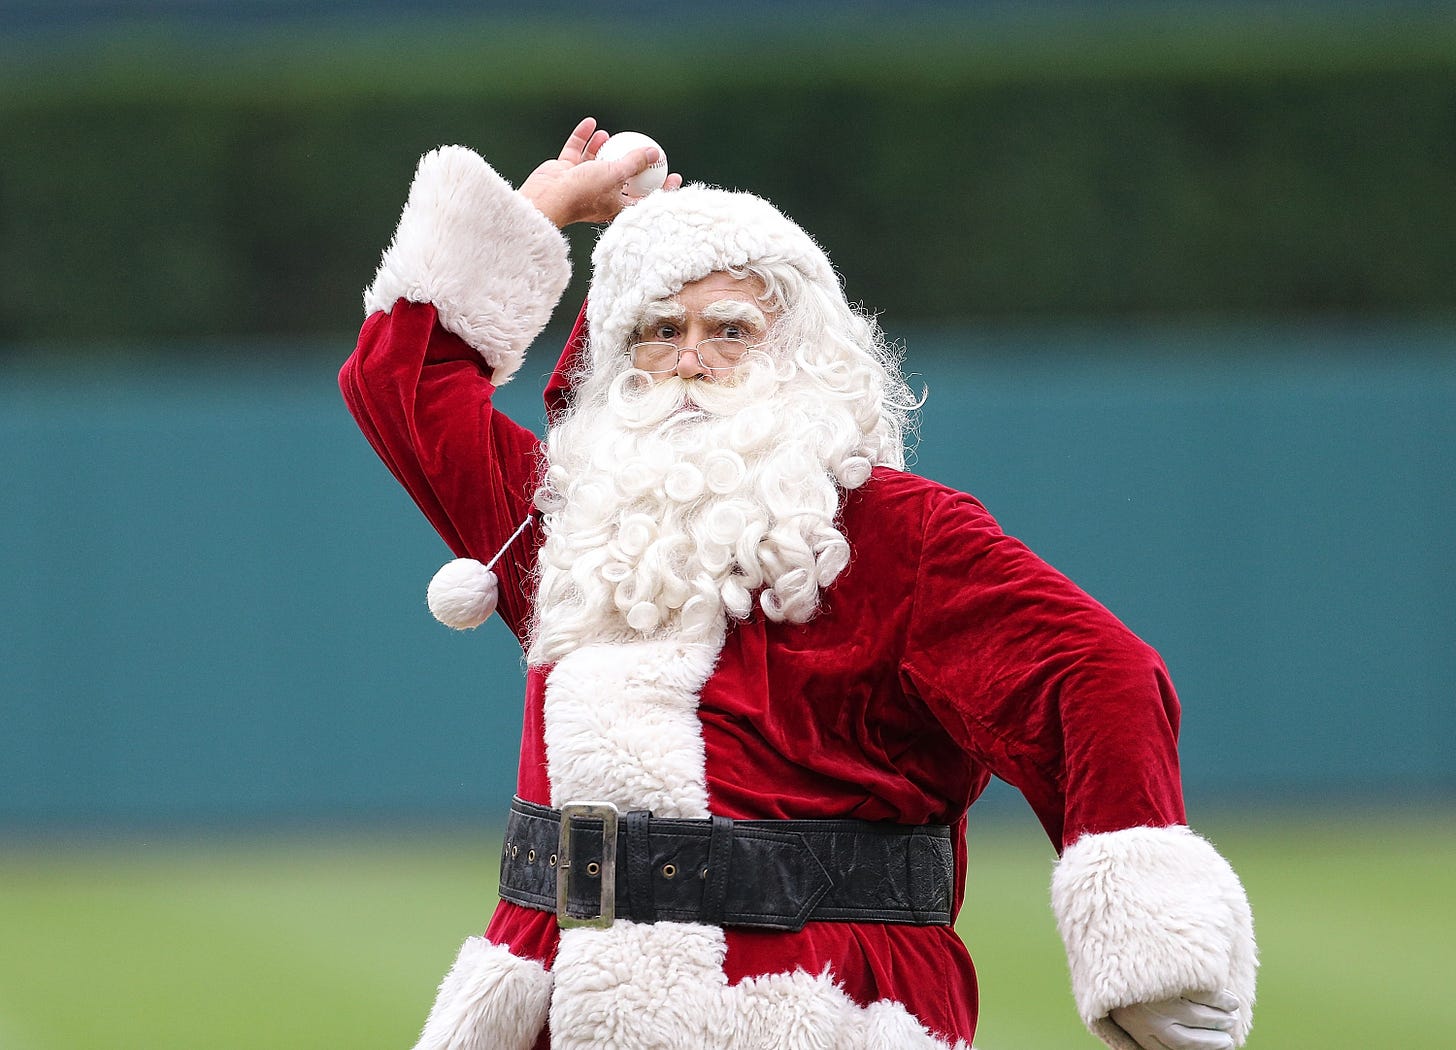 Santa throwing a pitch